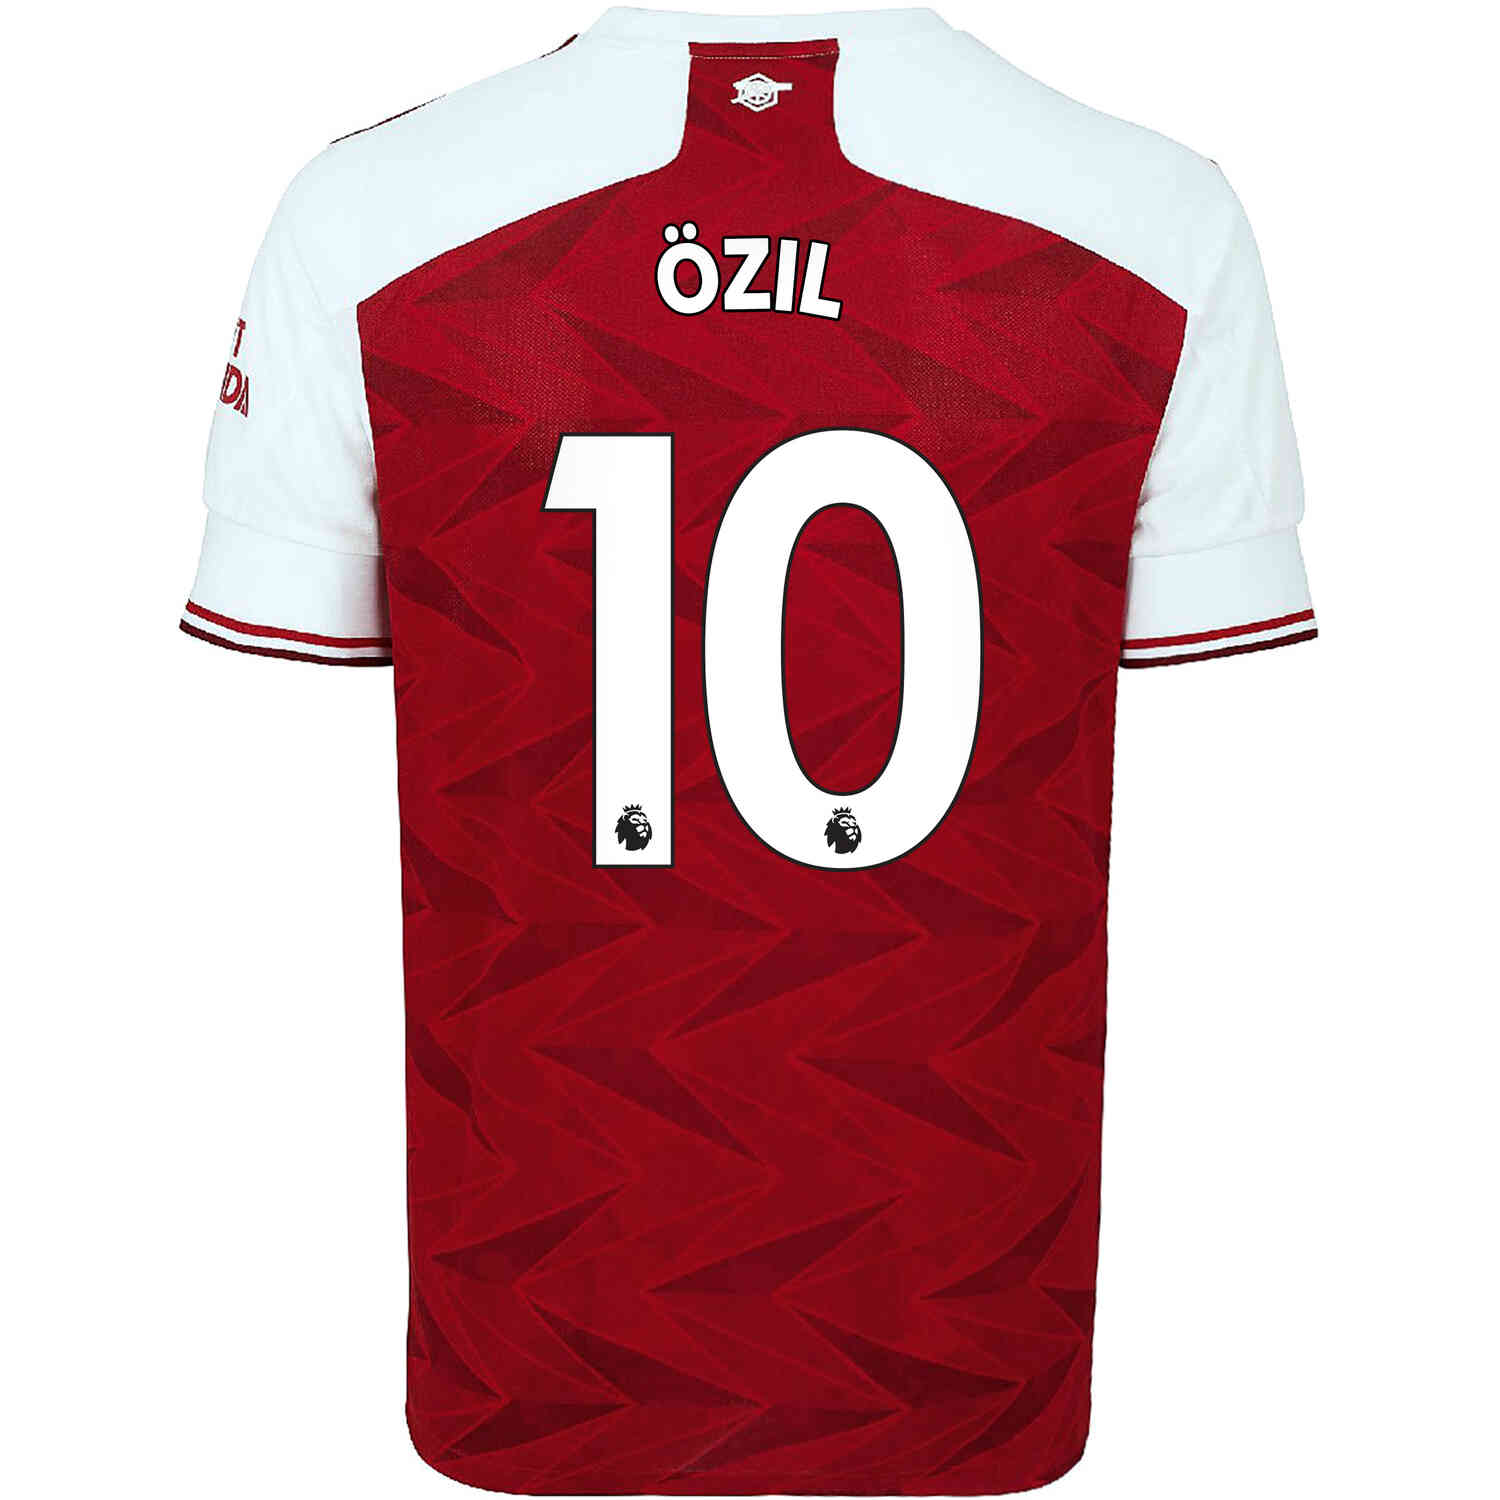 ozil kit number